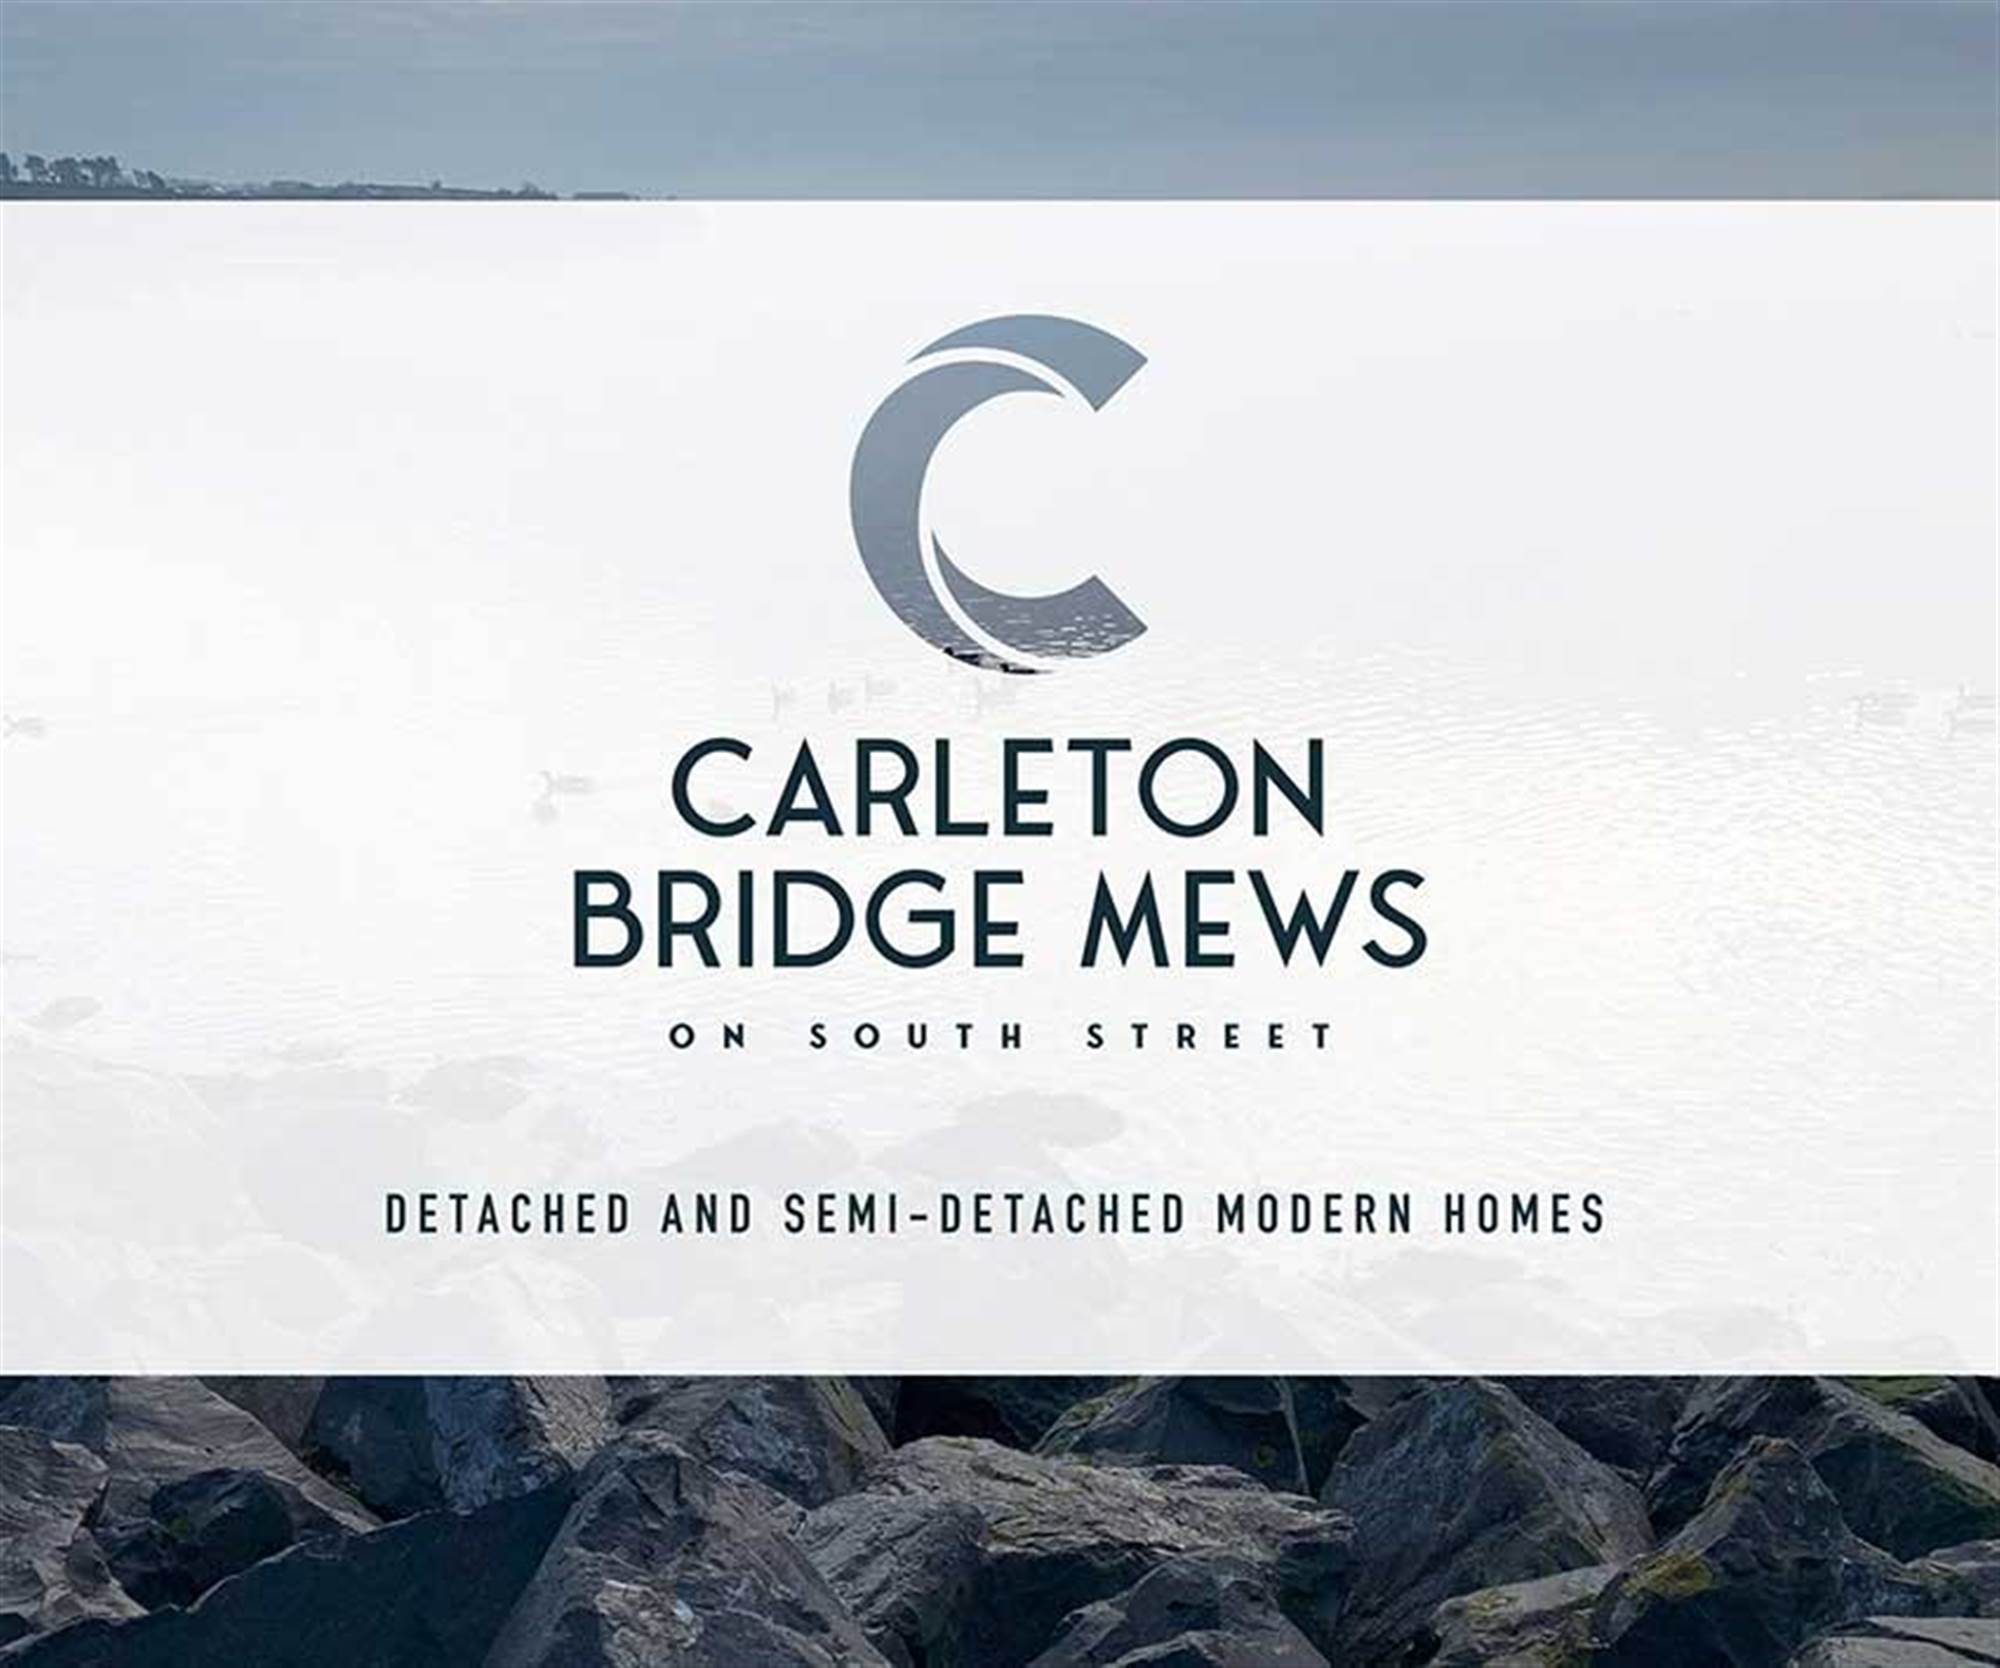 36 Carleton Bridge Mews